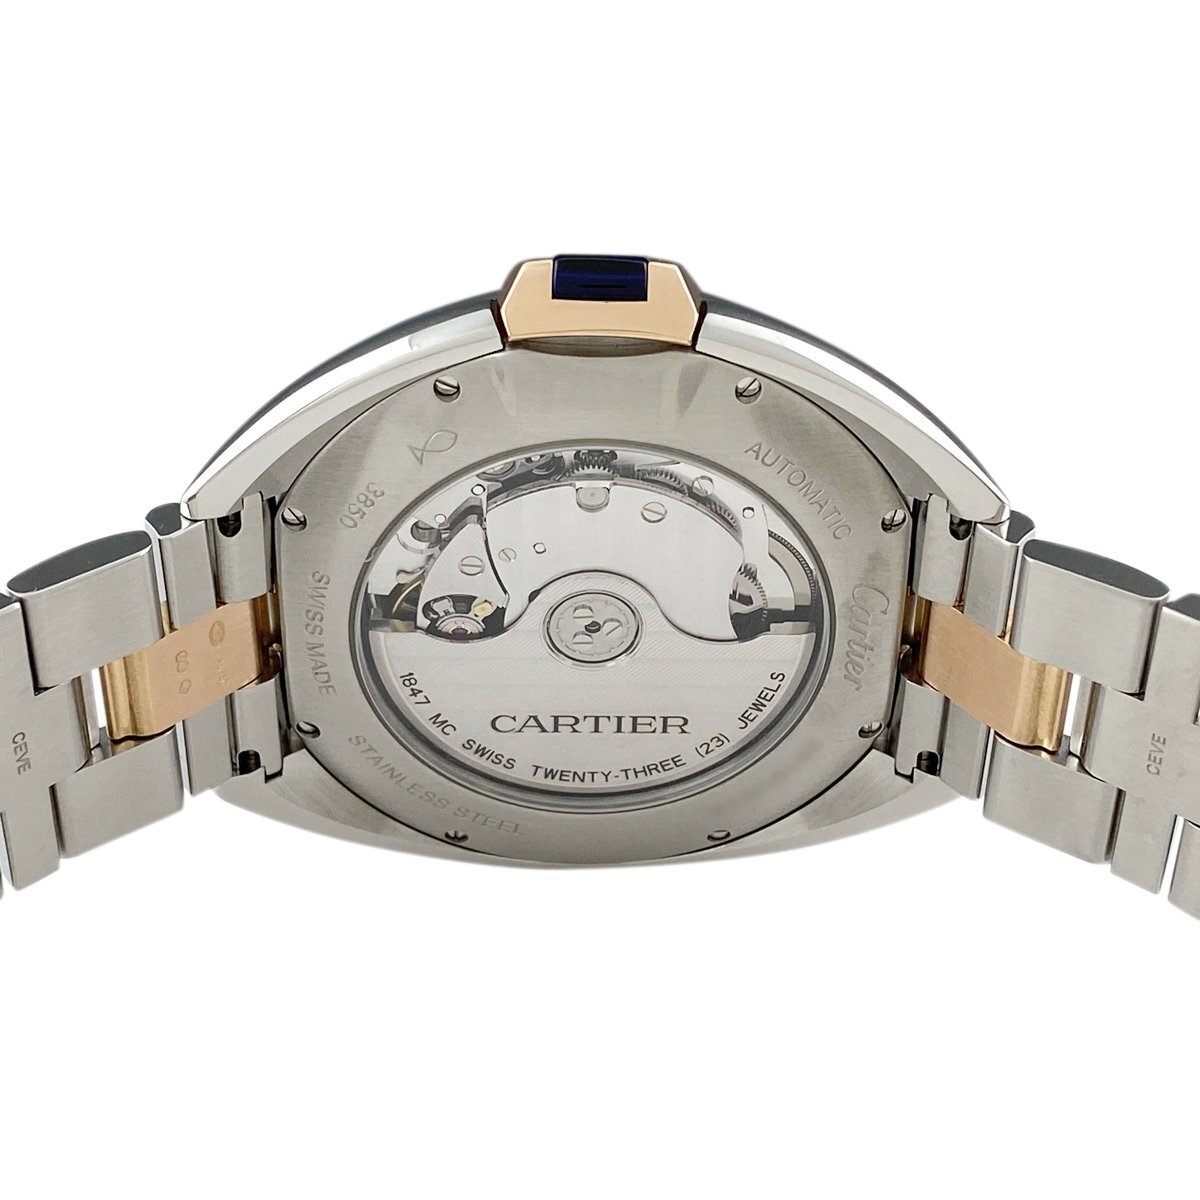  Cartier CARTIERkredu Rome nW2CL0002 wristwatch SS PG self-winding watch silver men's [ used ]